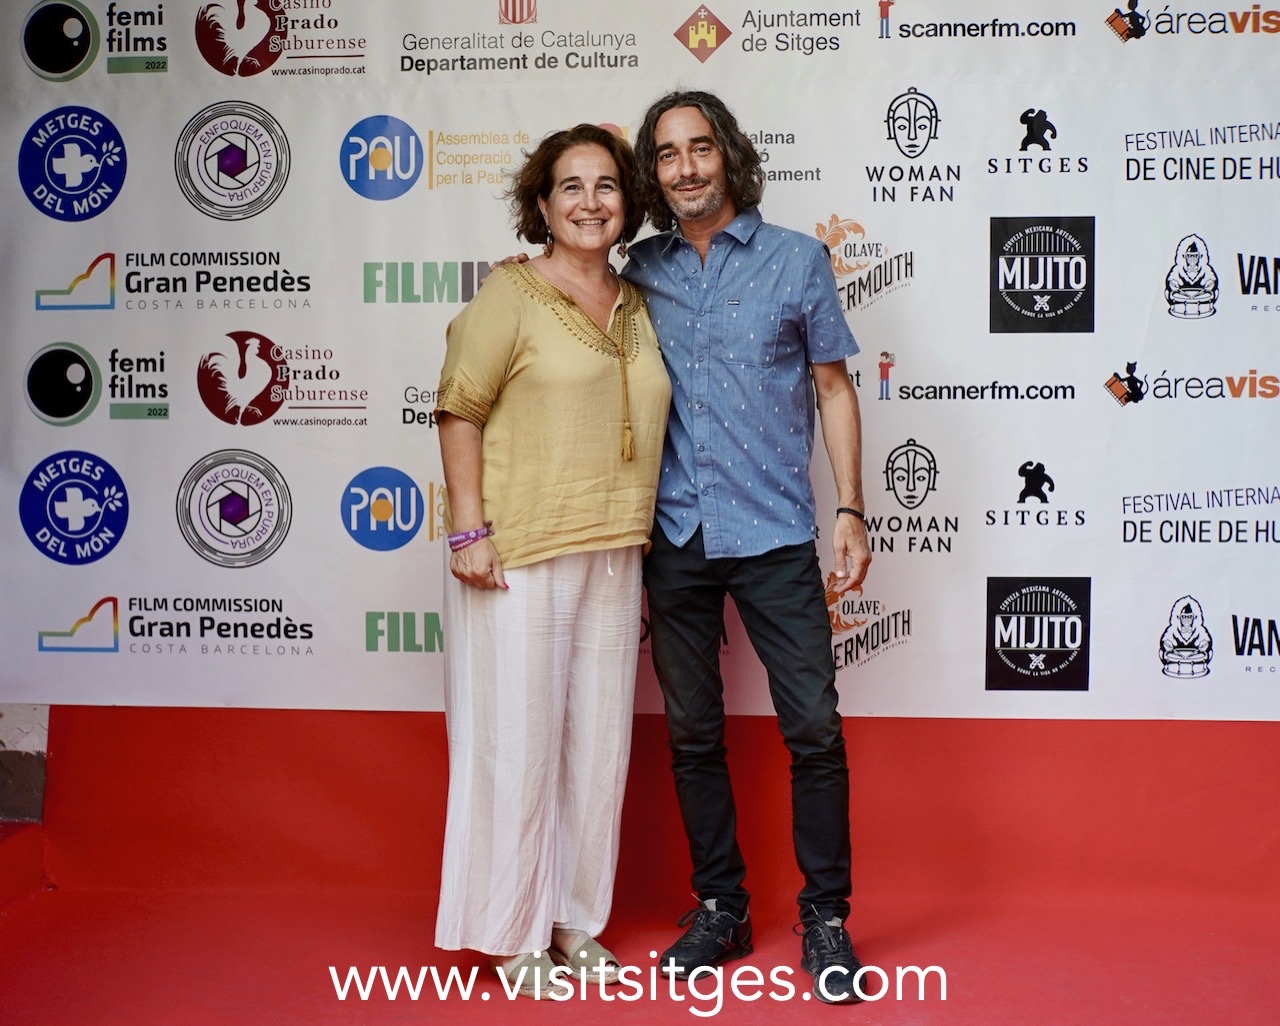 Gala Premis Femifilms 2022 al Festival Dona Art en Femení de Sitges